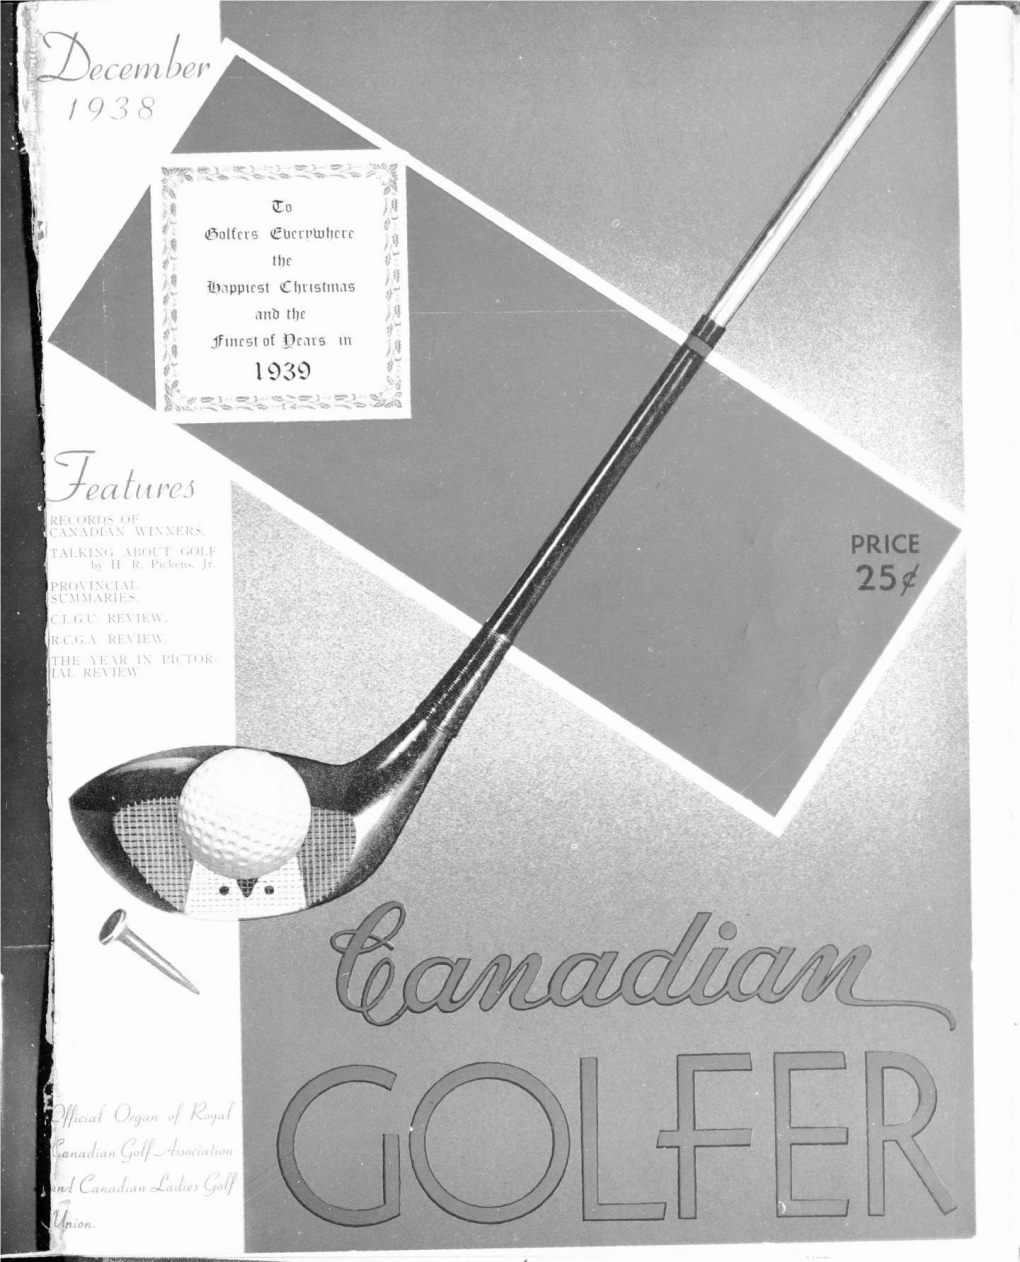 Canadian Golfer, December, 1938